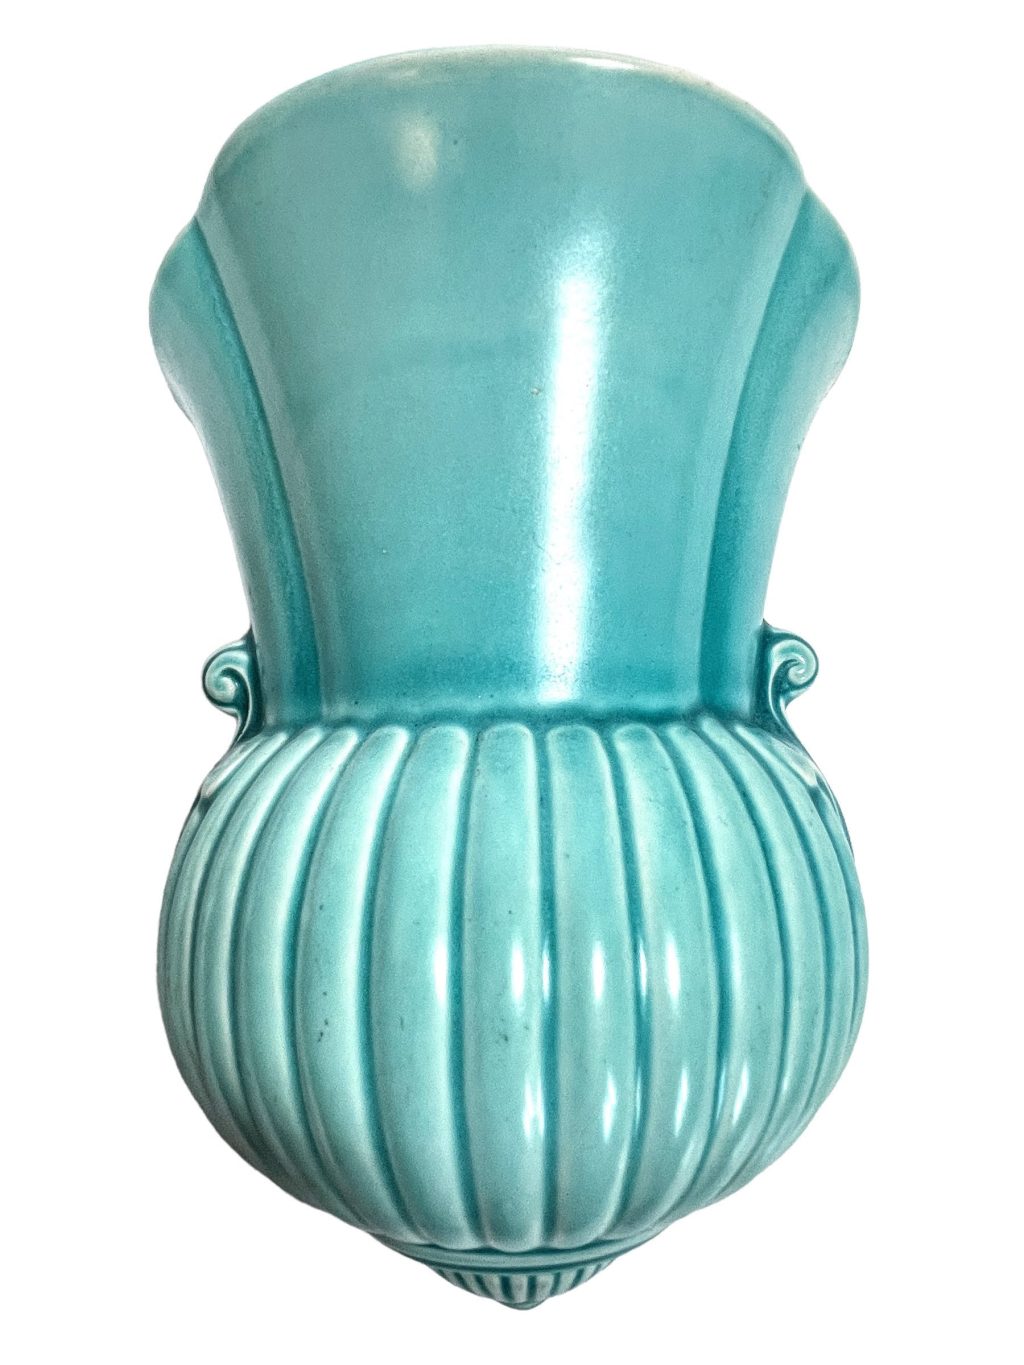 Vintage English Crown Devon Aqua Blue Ceramic Vase Storage Pot Vase Urn Display Wall Mounted circa 1950-60’s